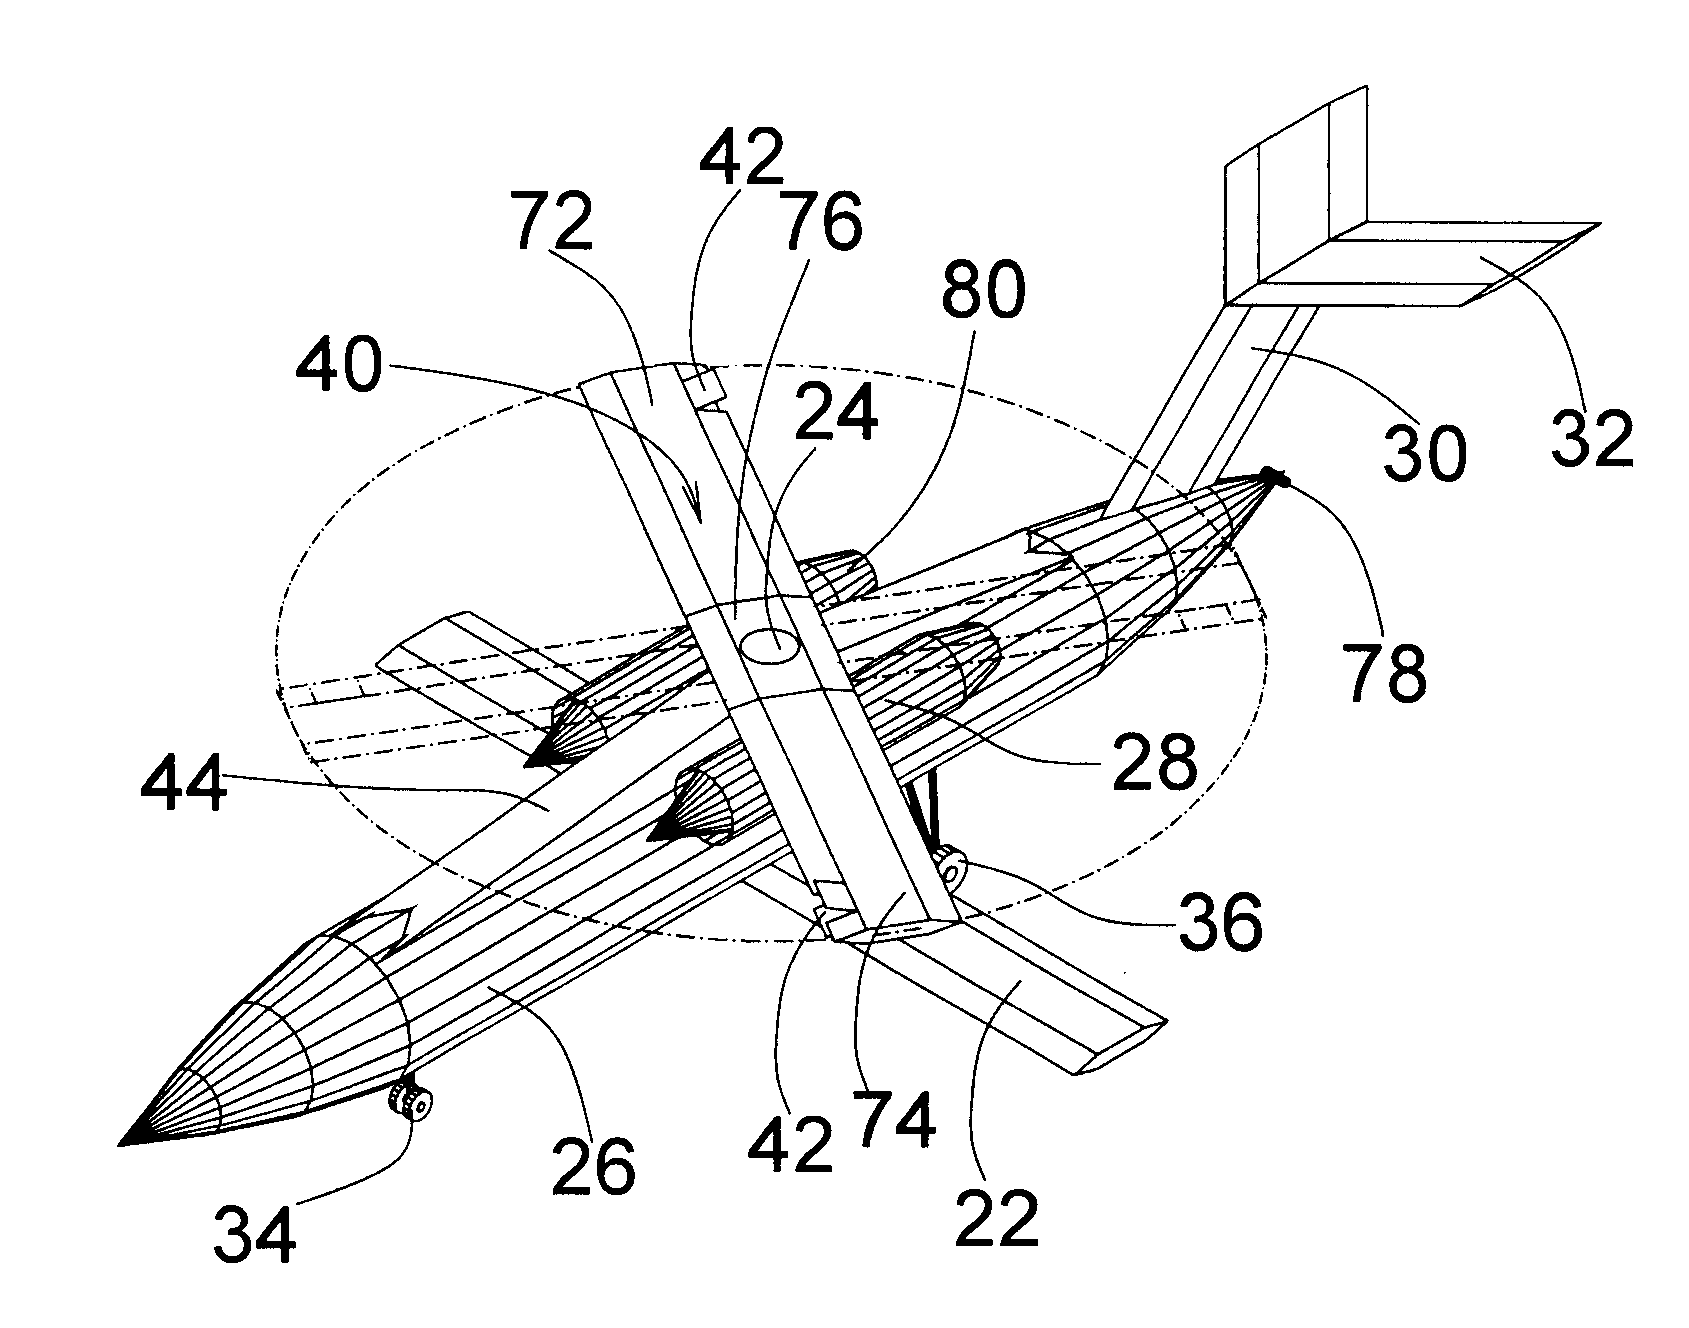 Air vehicle having rotor/scissors wing